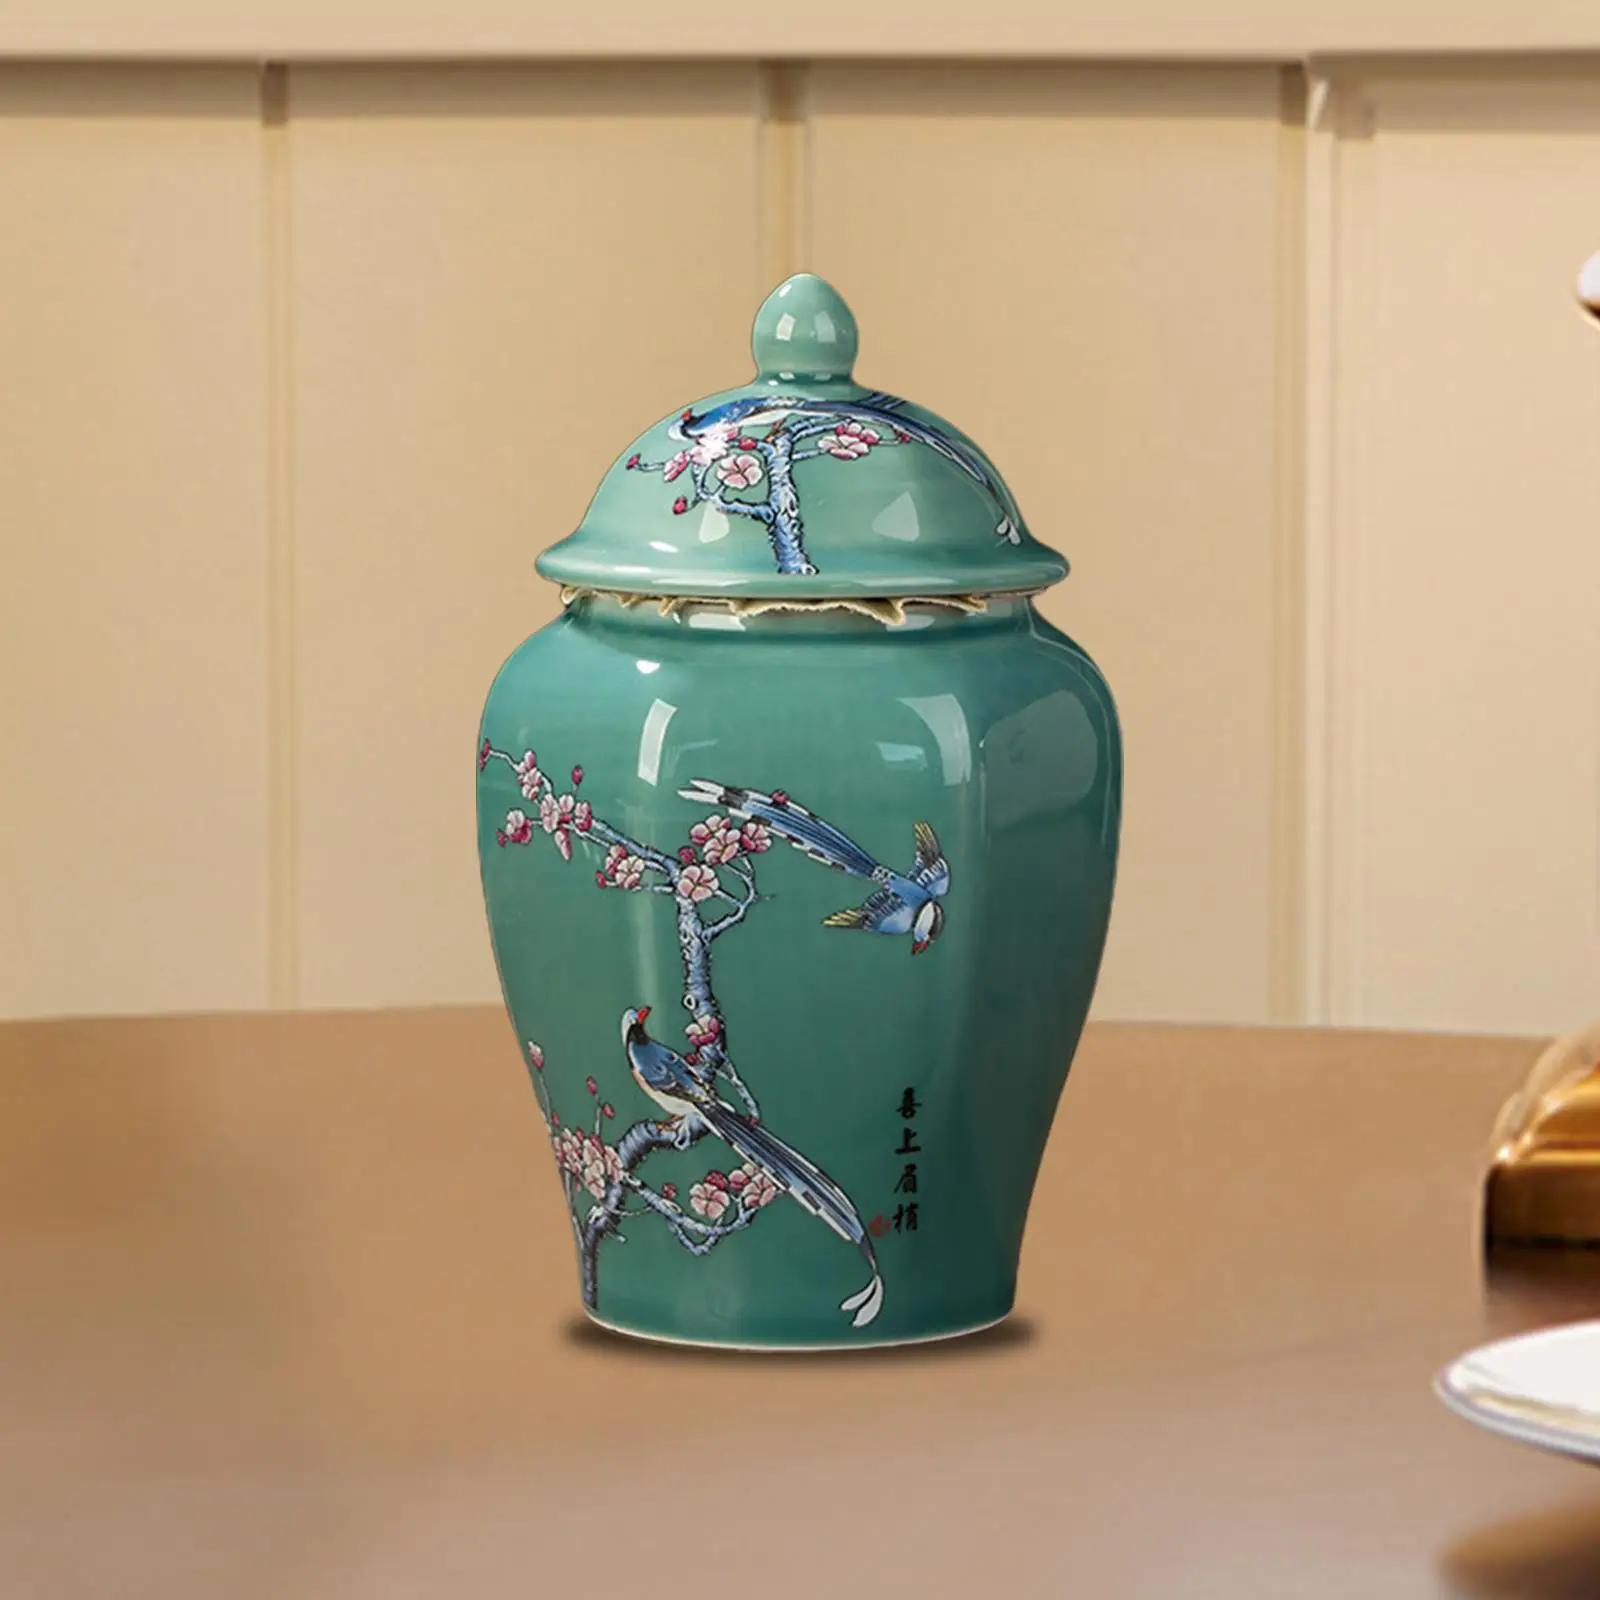 Ceramic Ginger Jar Crafts Gift Vintage Style Traditional Vase Porcelain Jars for Countertop Home Decor Weddings Home Office